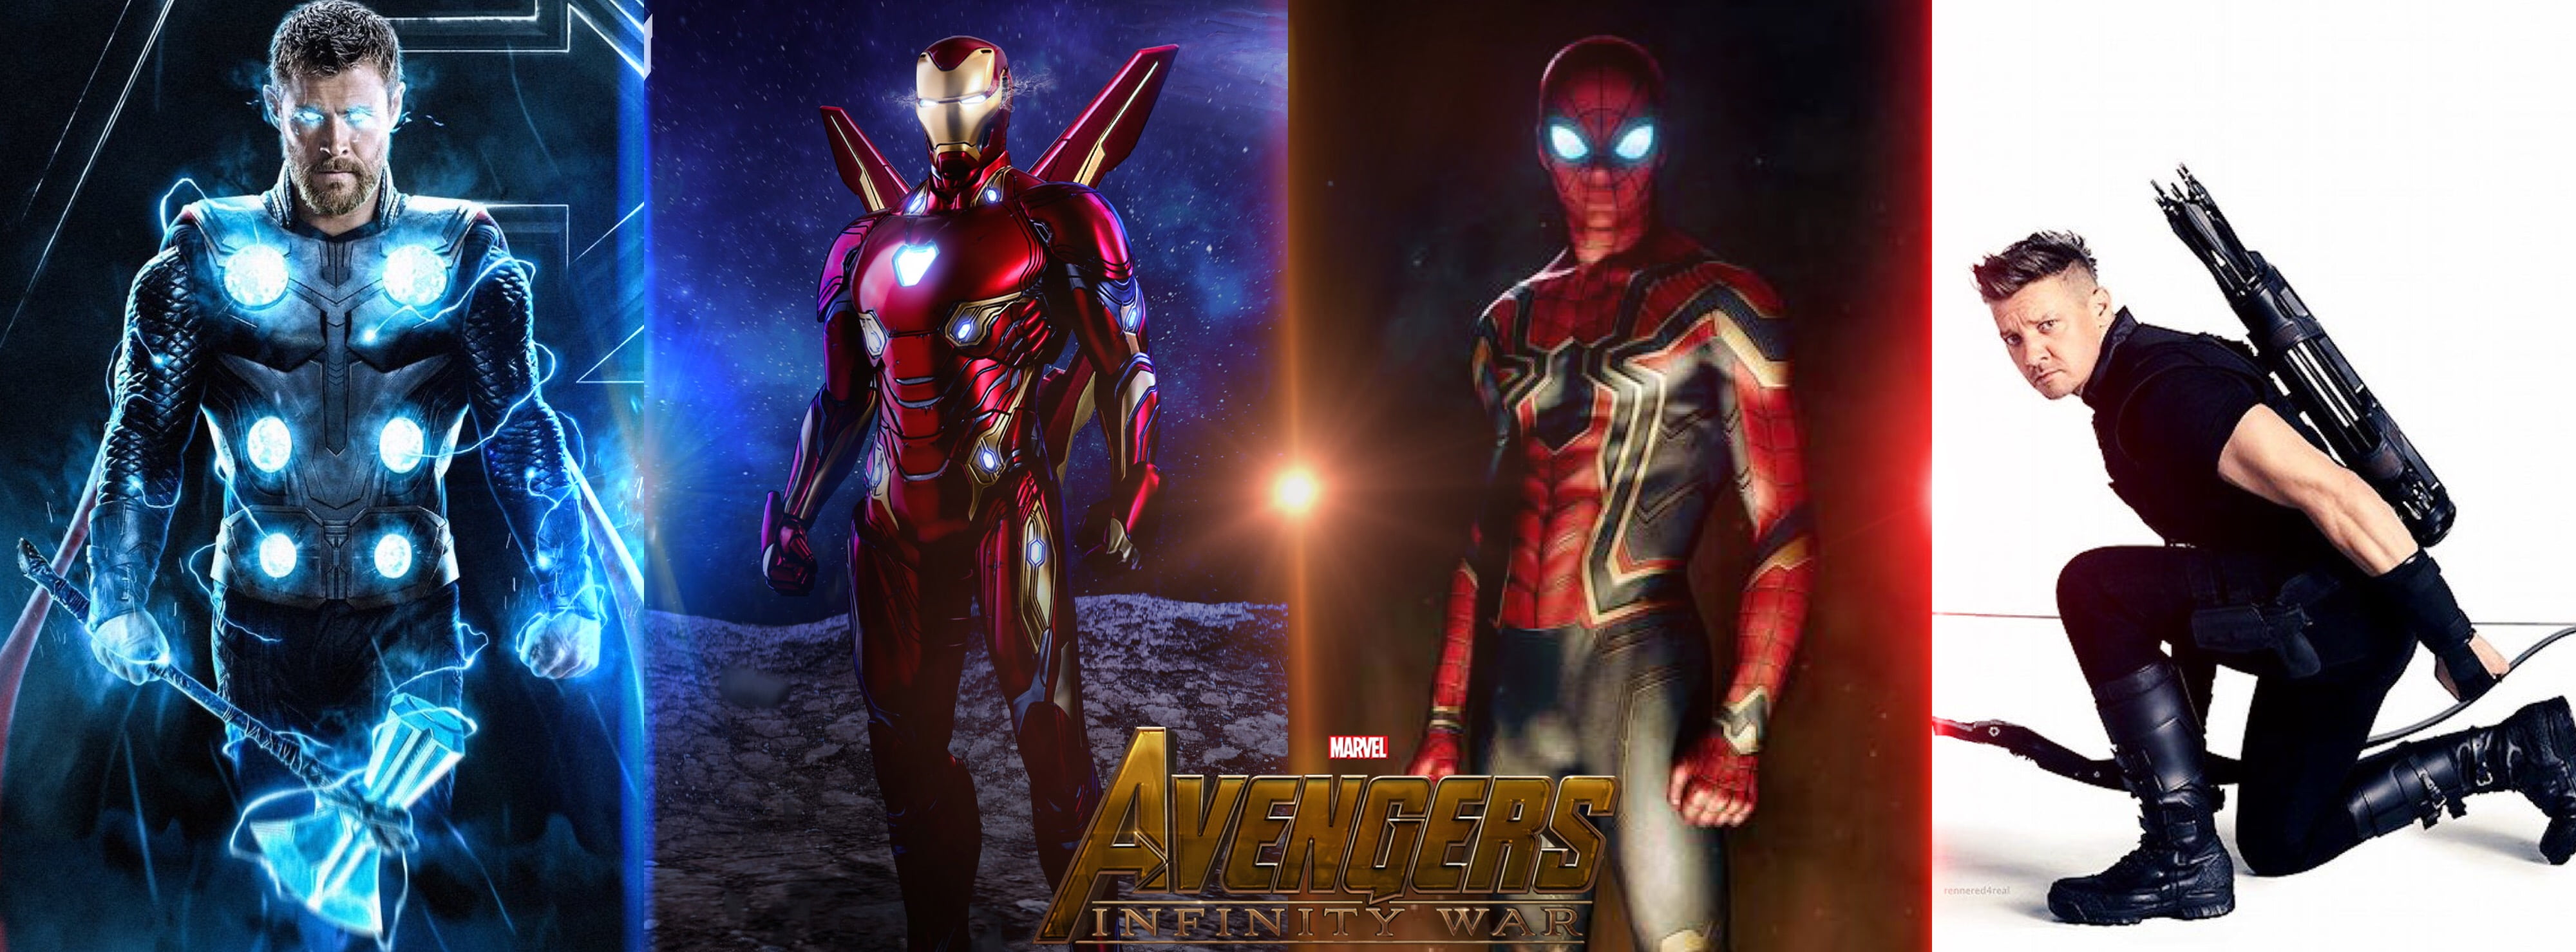 Avengers character poster, Avengers Infinity War, Iron Man, Thor